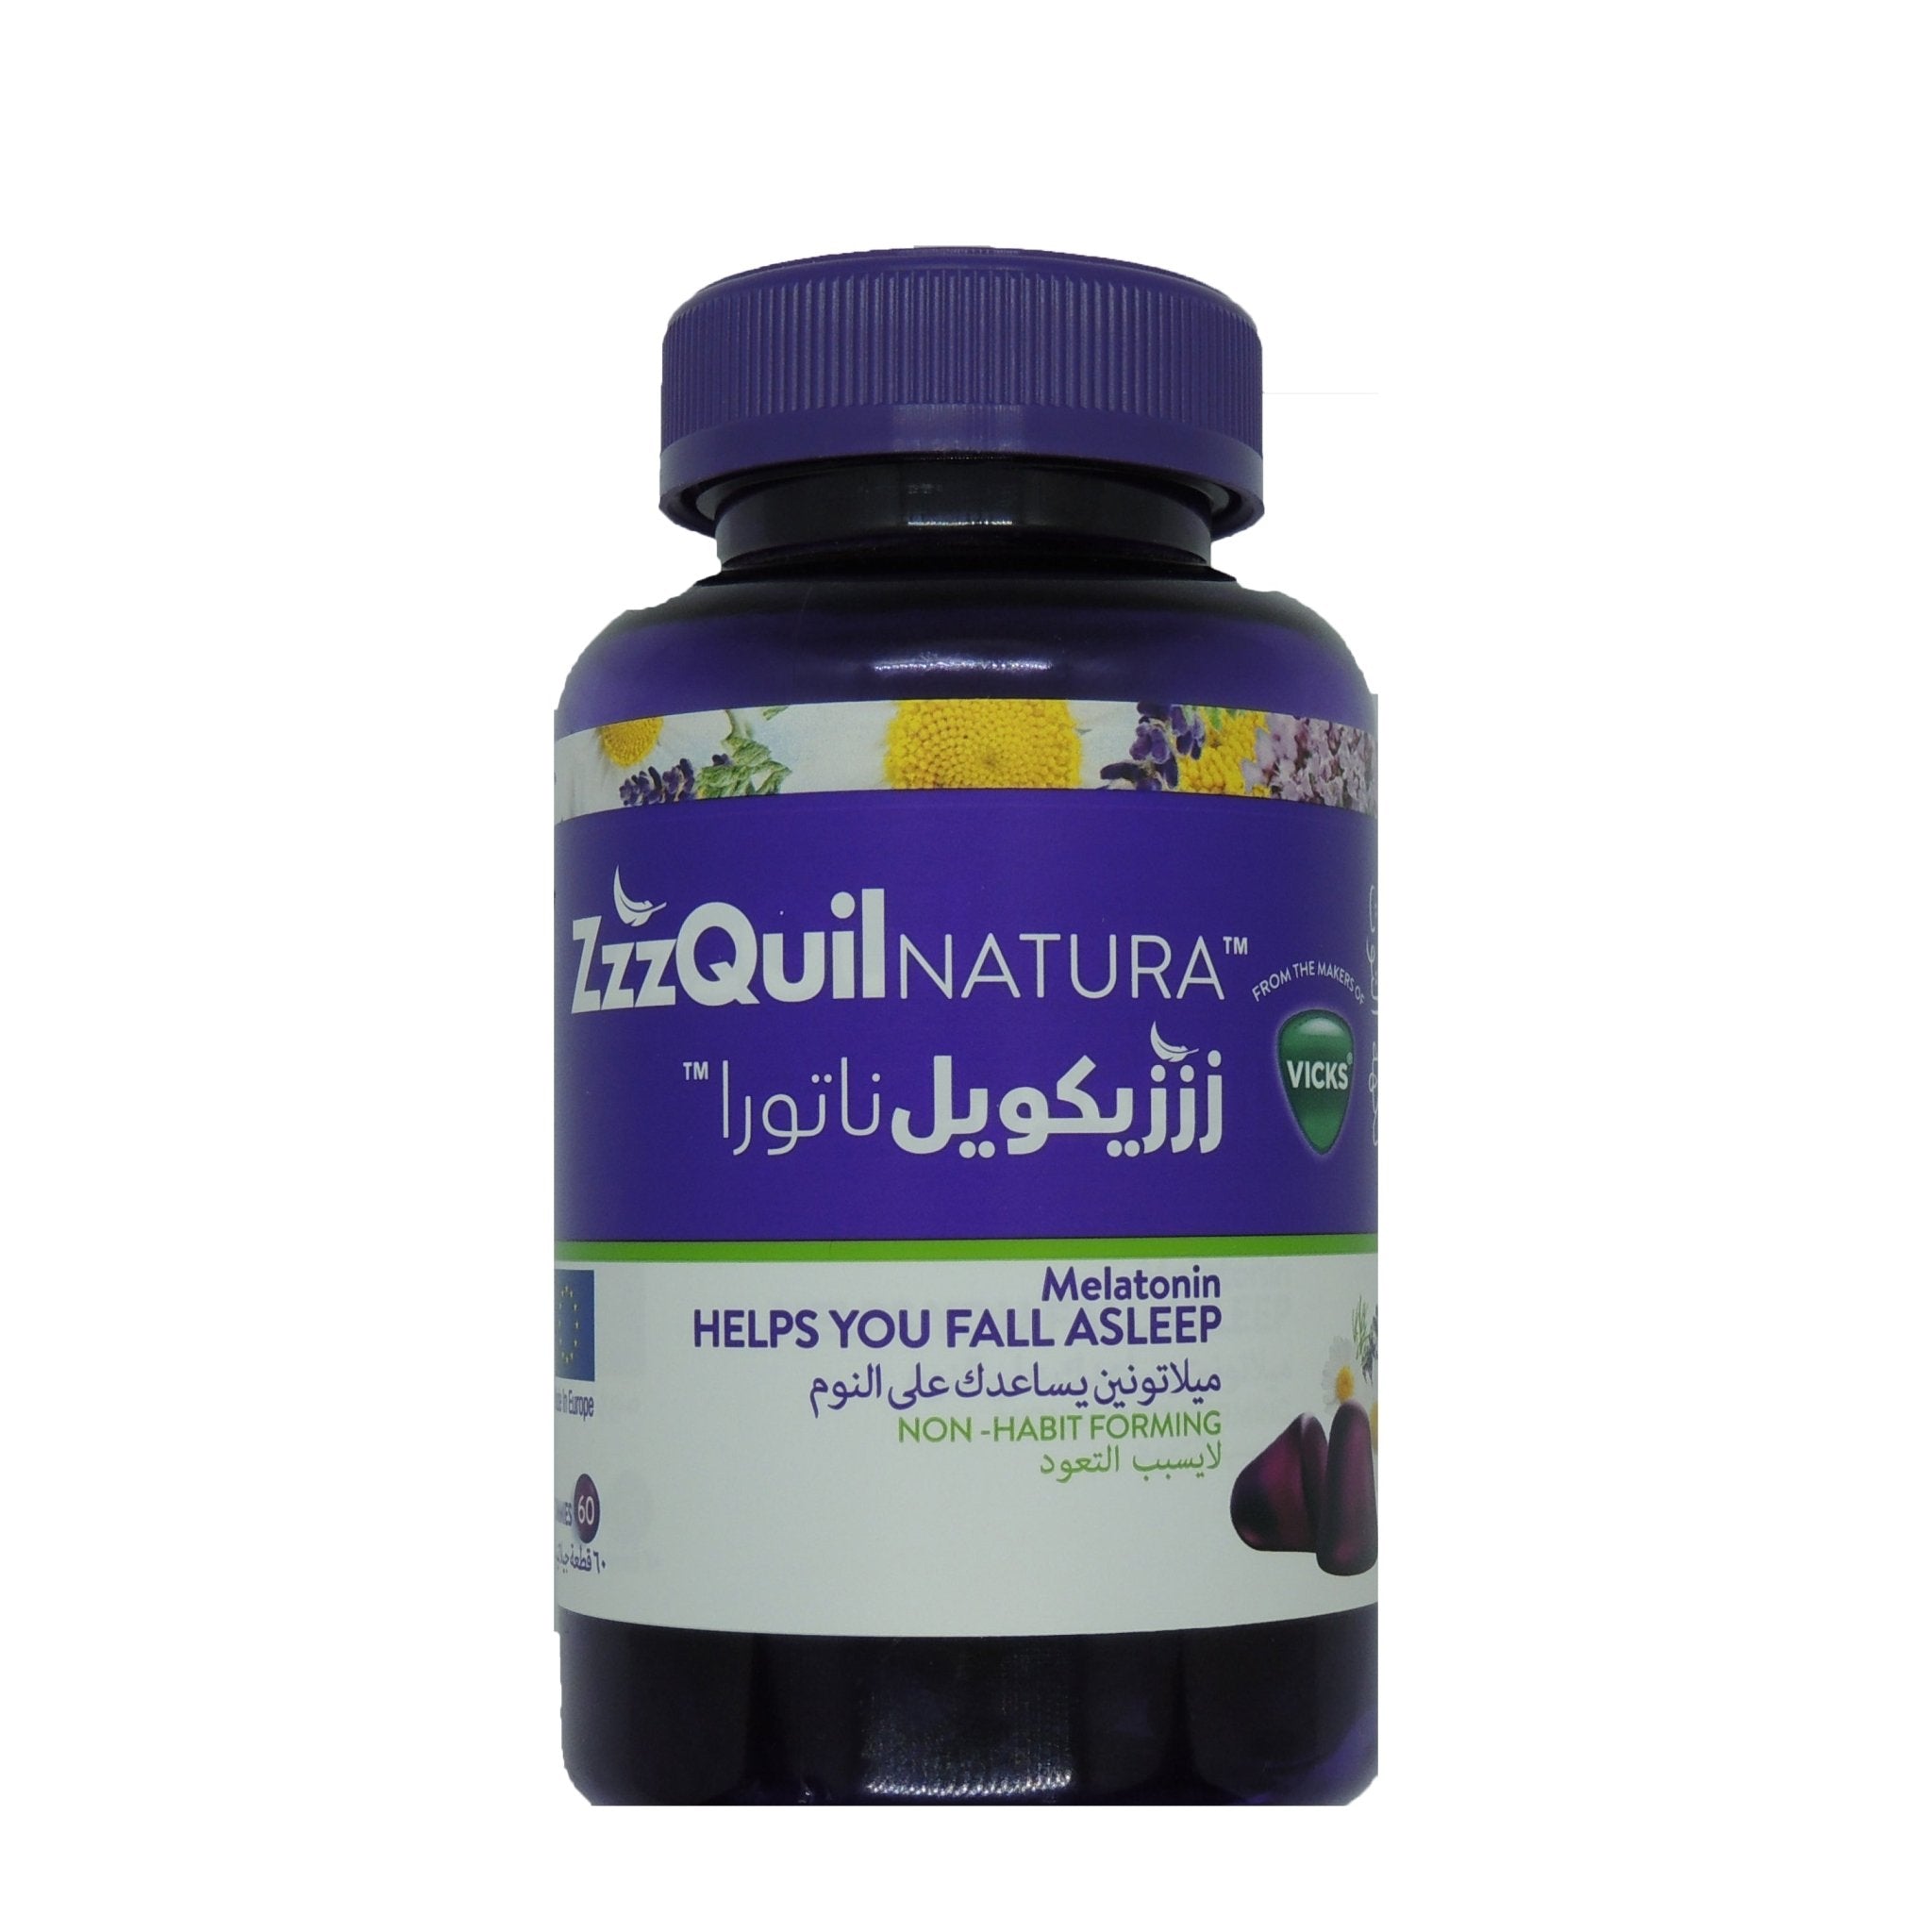 Vicks Zzzquil Natura Melatonin 1mg Berry Flavour - 60 Gummies - Bloom Pharmacy